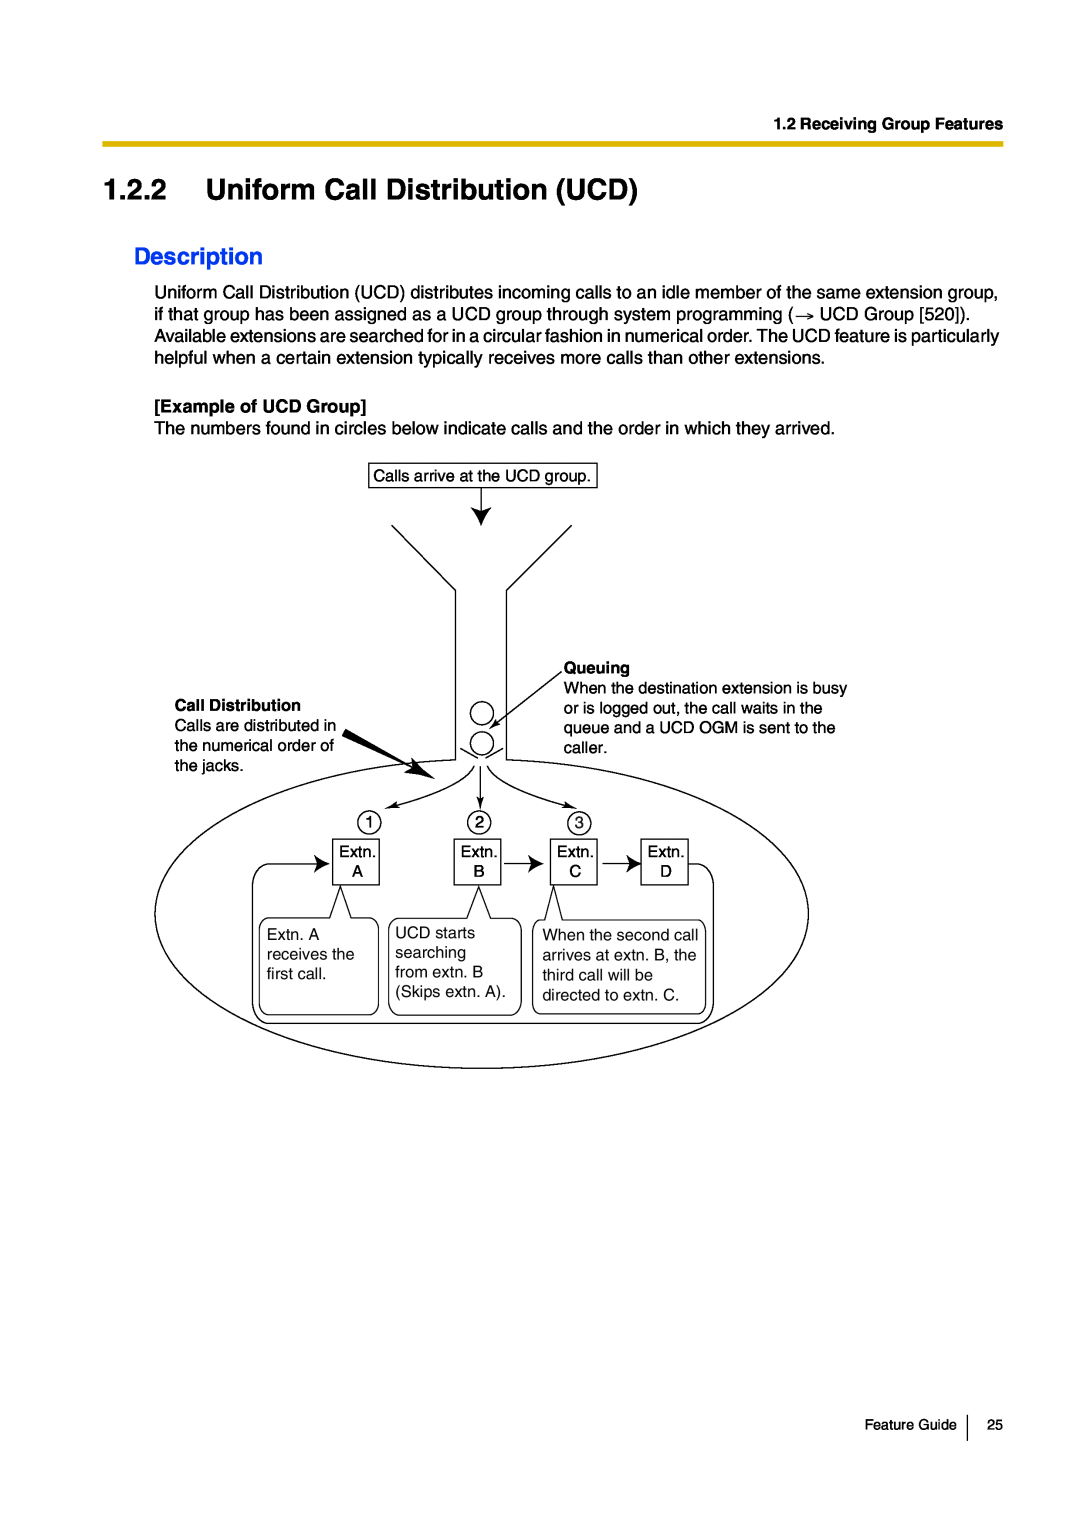 Panasonic kx-tea308 manual 1.2.2Uniform Call Distribution UCD, Description, Example of UCD Group 